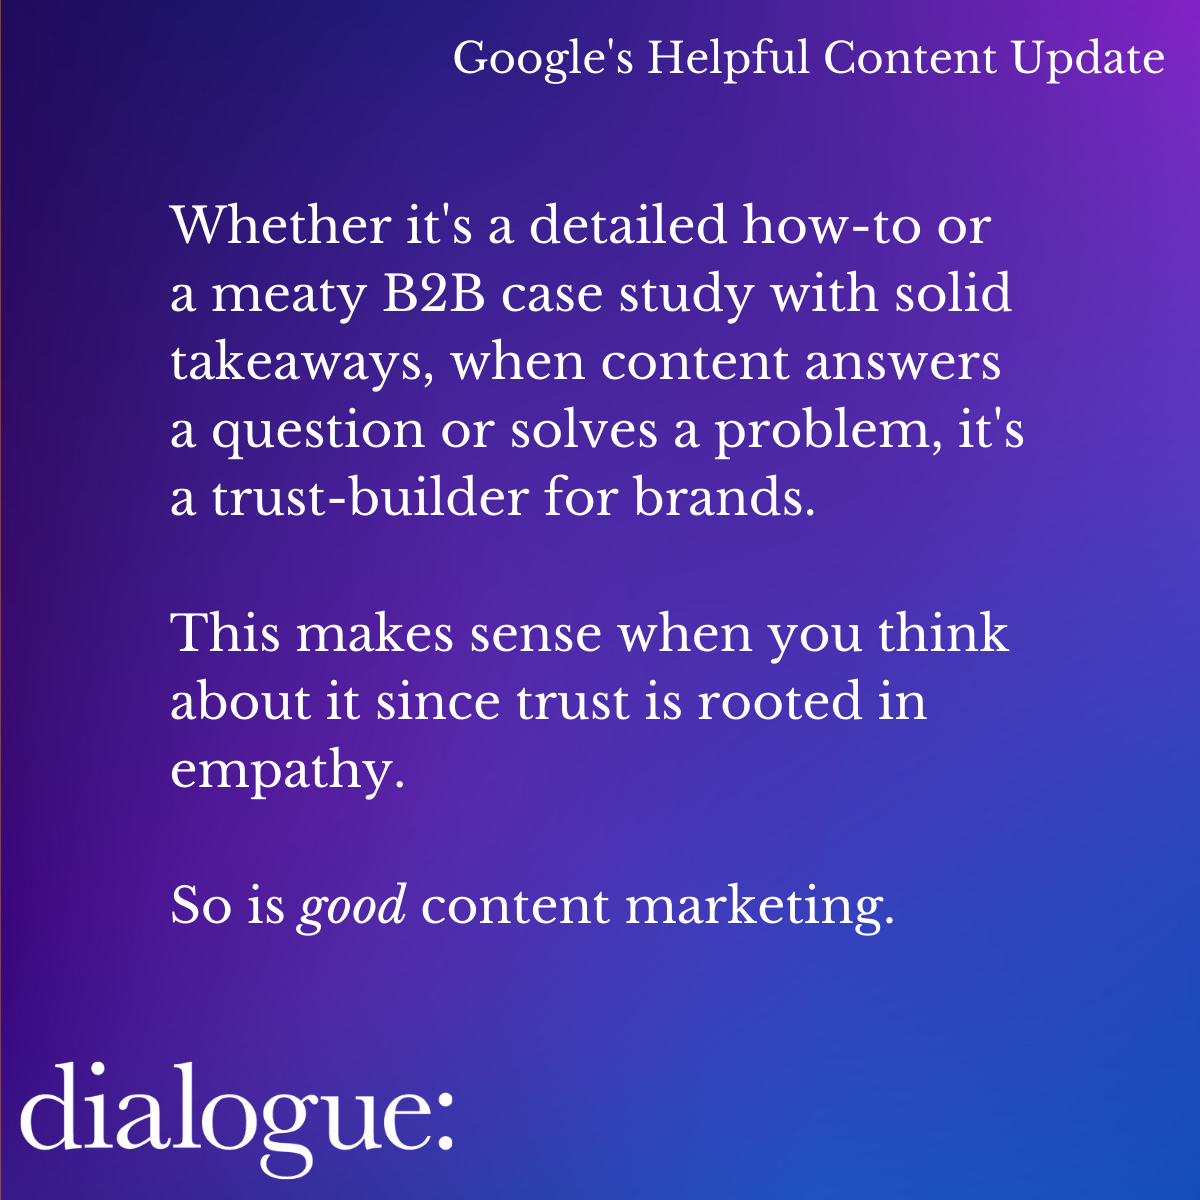 Dialogue Marketing descripition of good content marketing